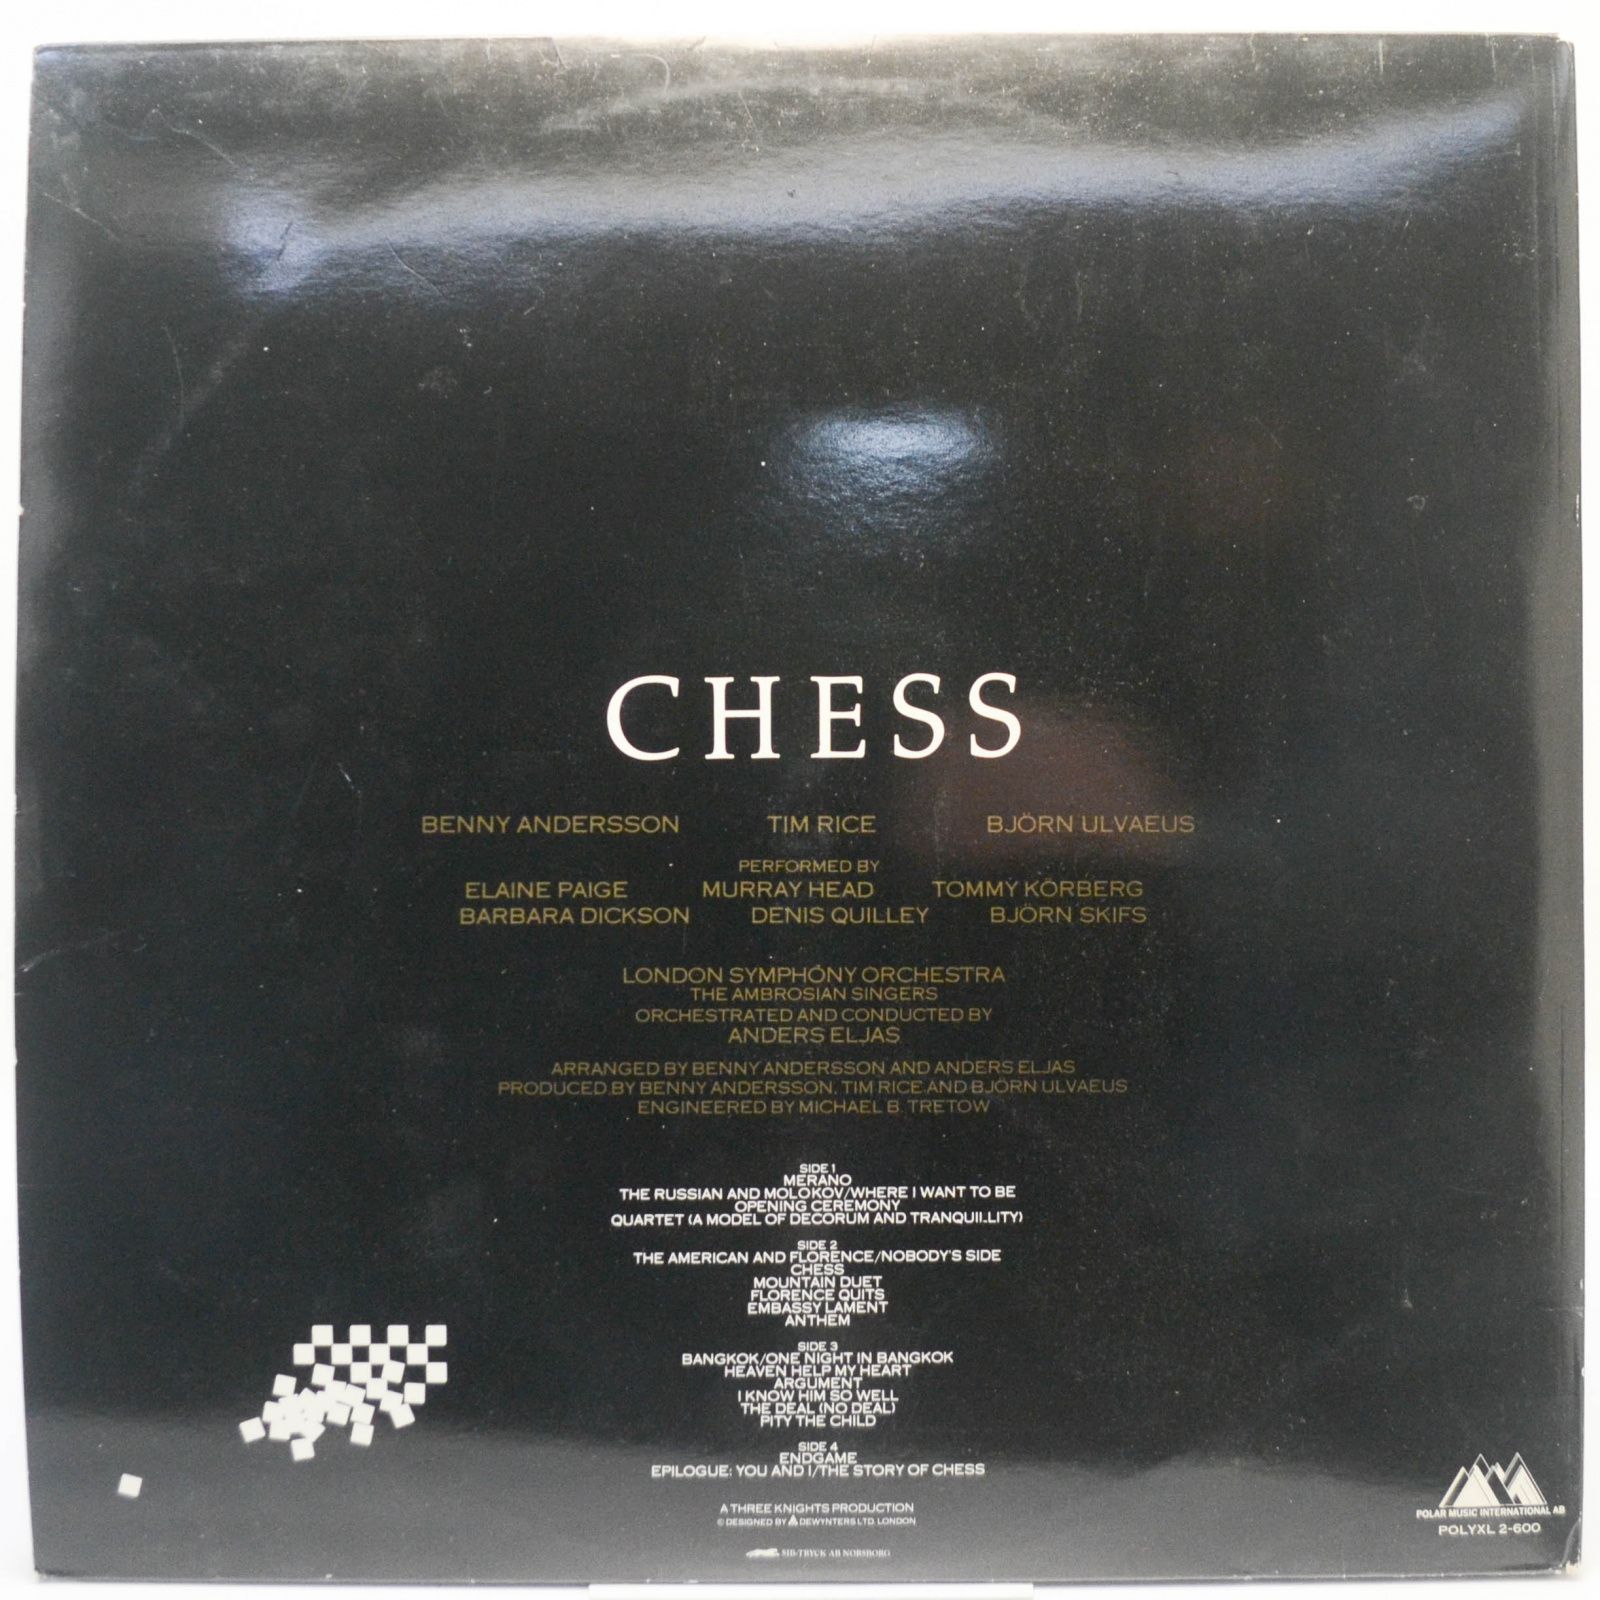 Benny Andersson · Tim Rice · Björn Ulvaeus — Chess (2LP, 1-st, Sweden), 1984